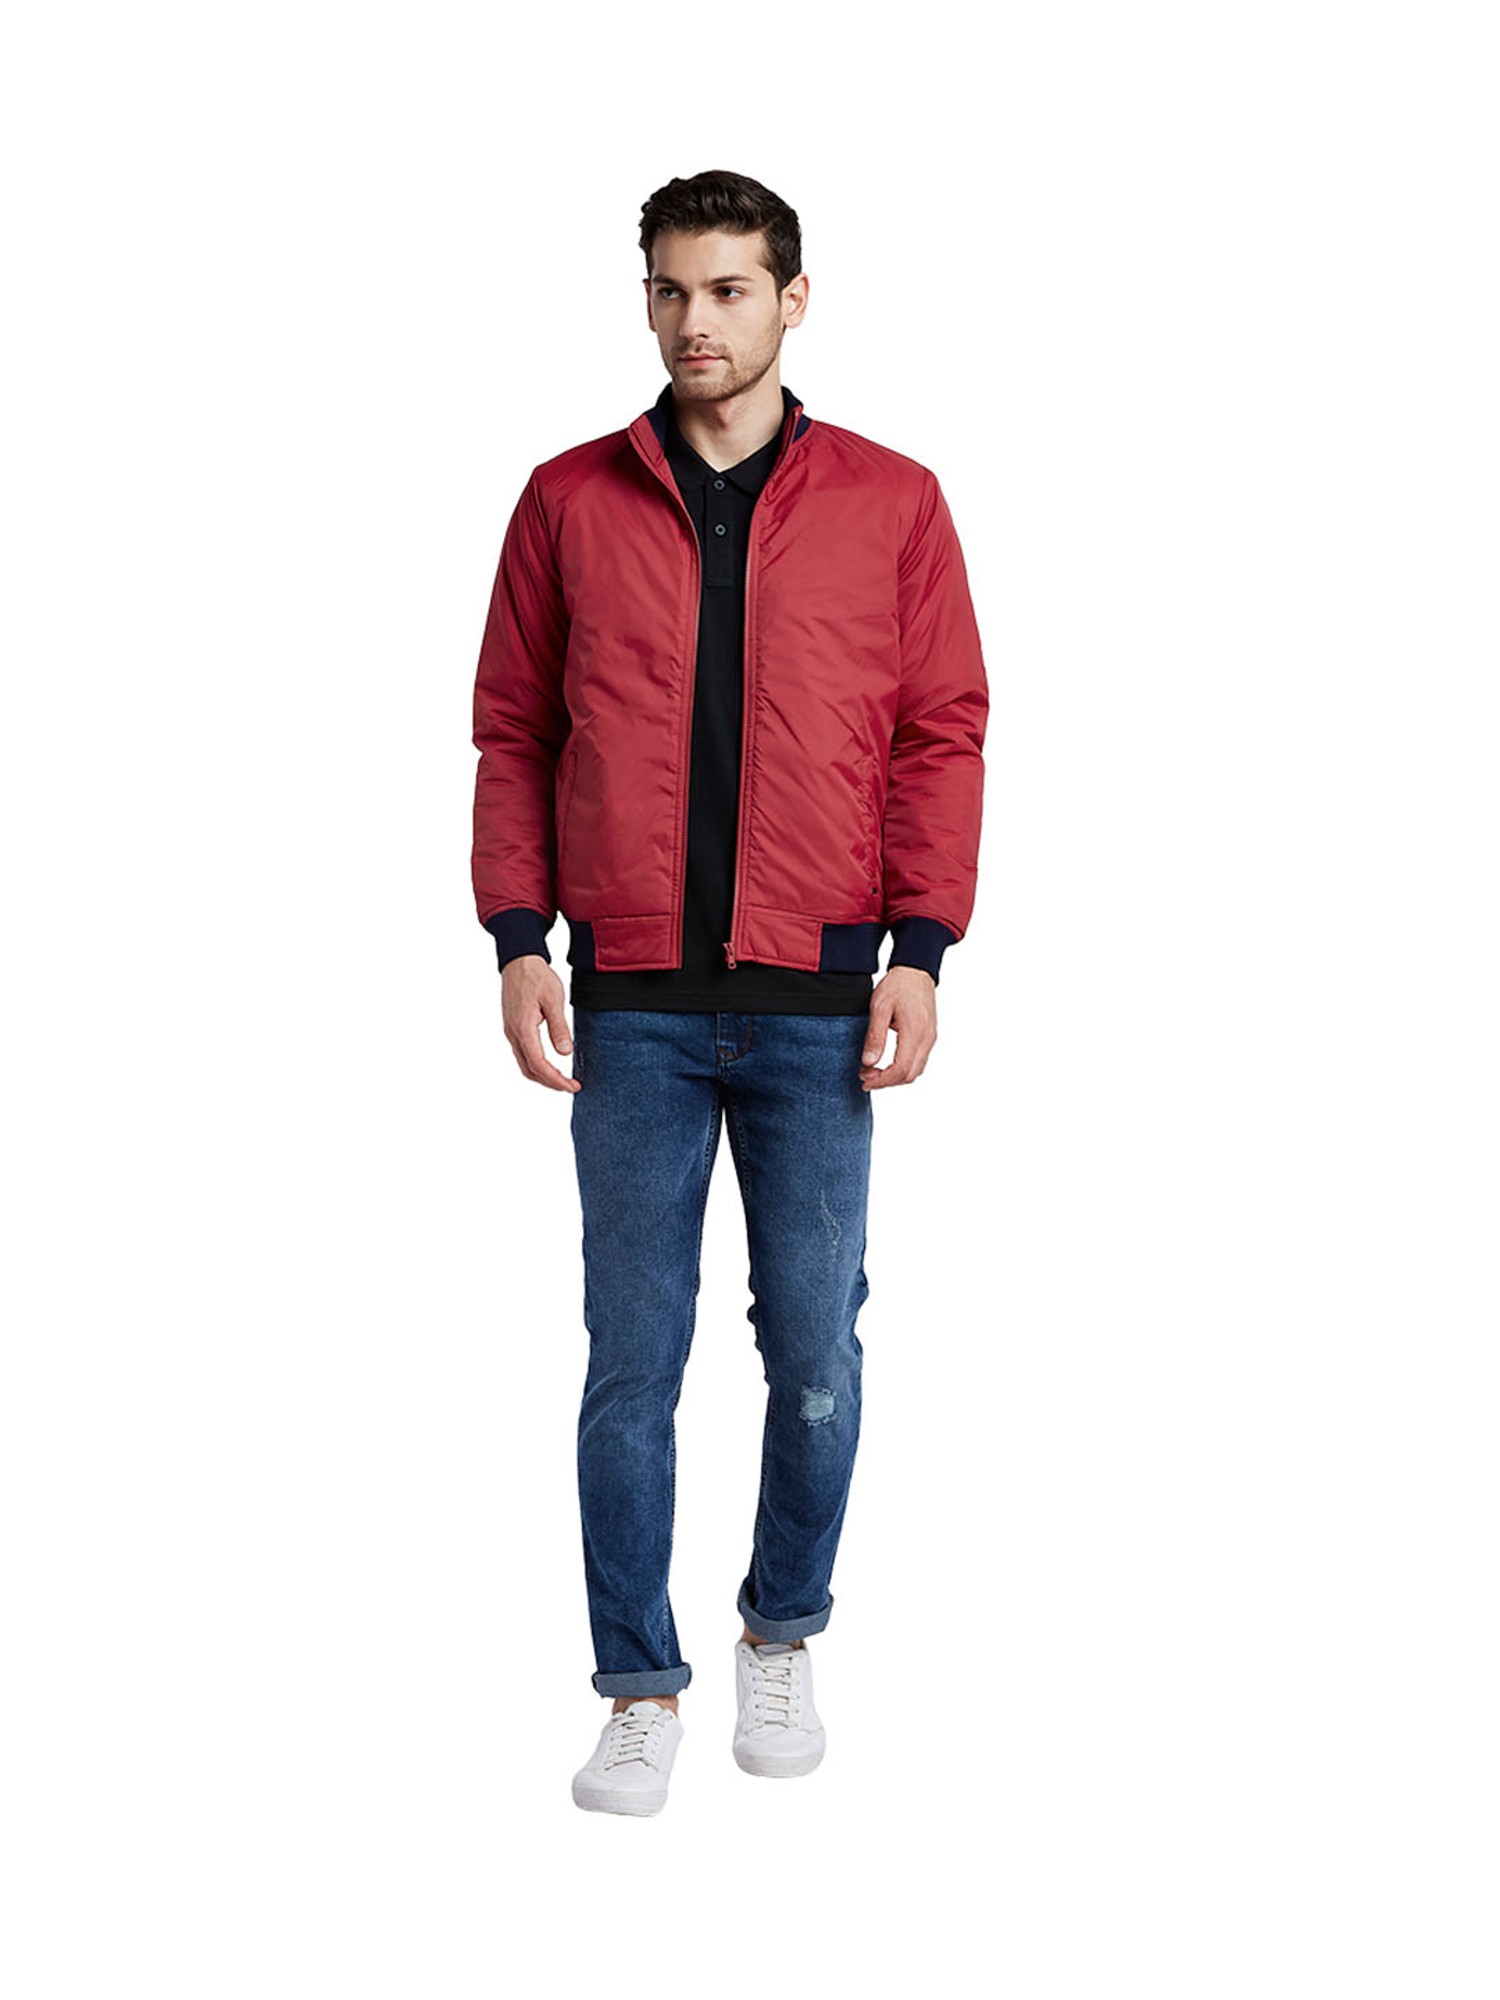 Buy Parx Medium Red Jacket for Men Online @ Tata CLiQ